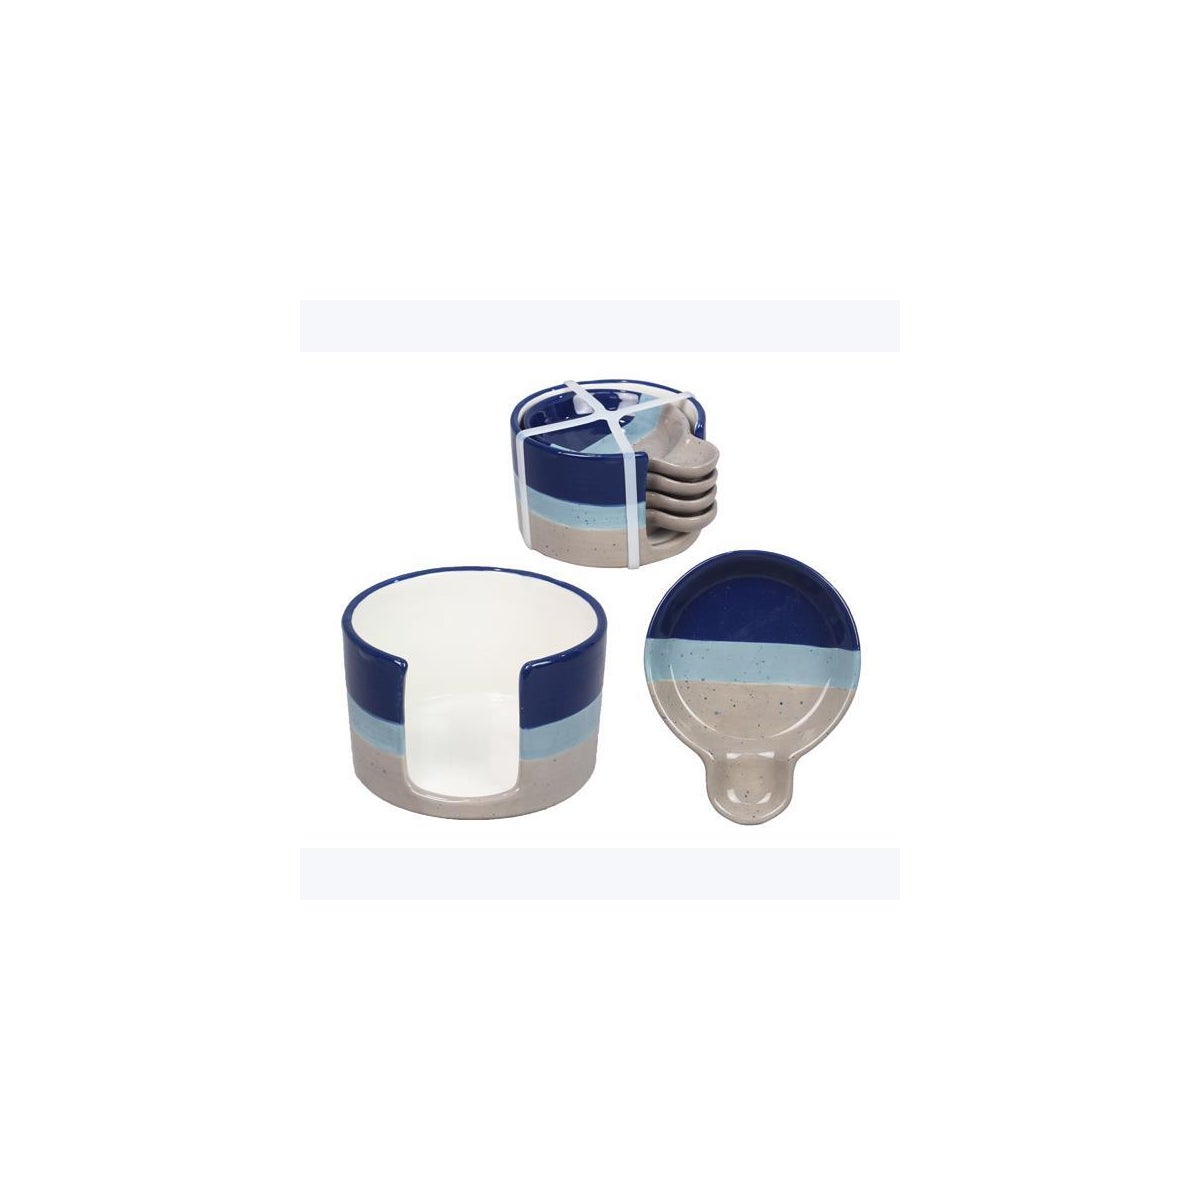 Ceramic Artistic Blue Snack Plates with Holder, 5 pcs set